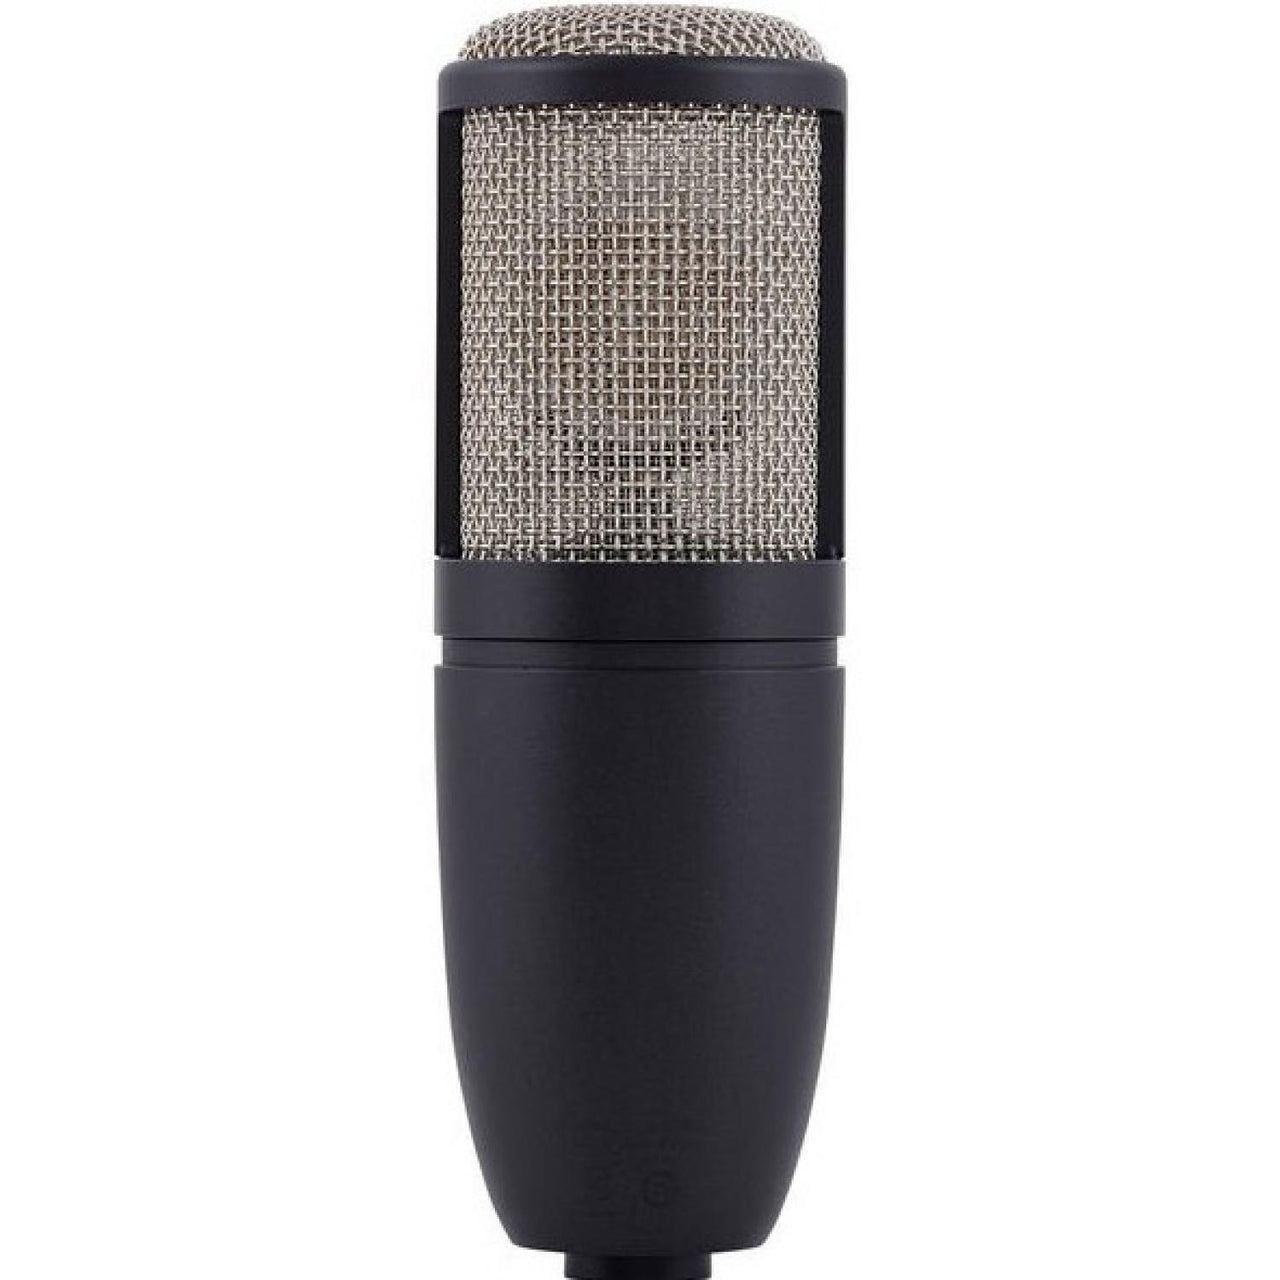 Microfono Akg De Estudio Condensador Xlr, P220